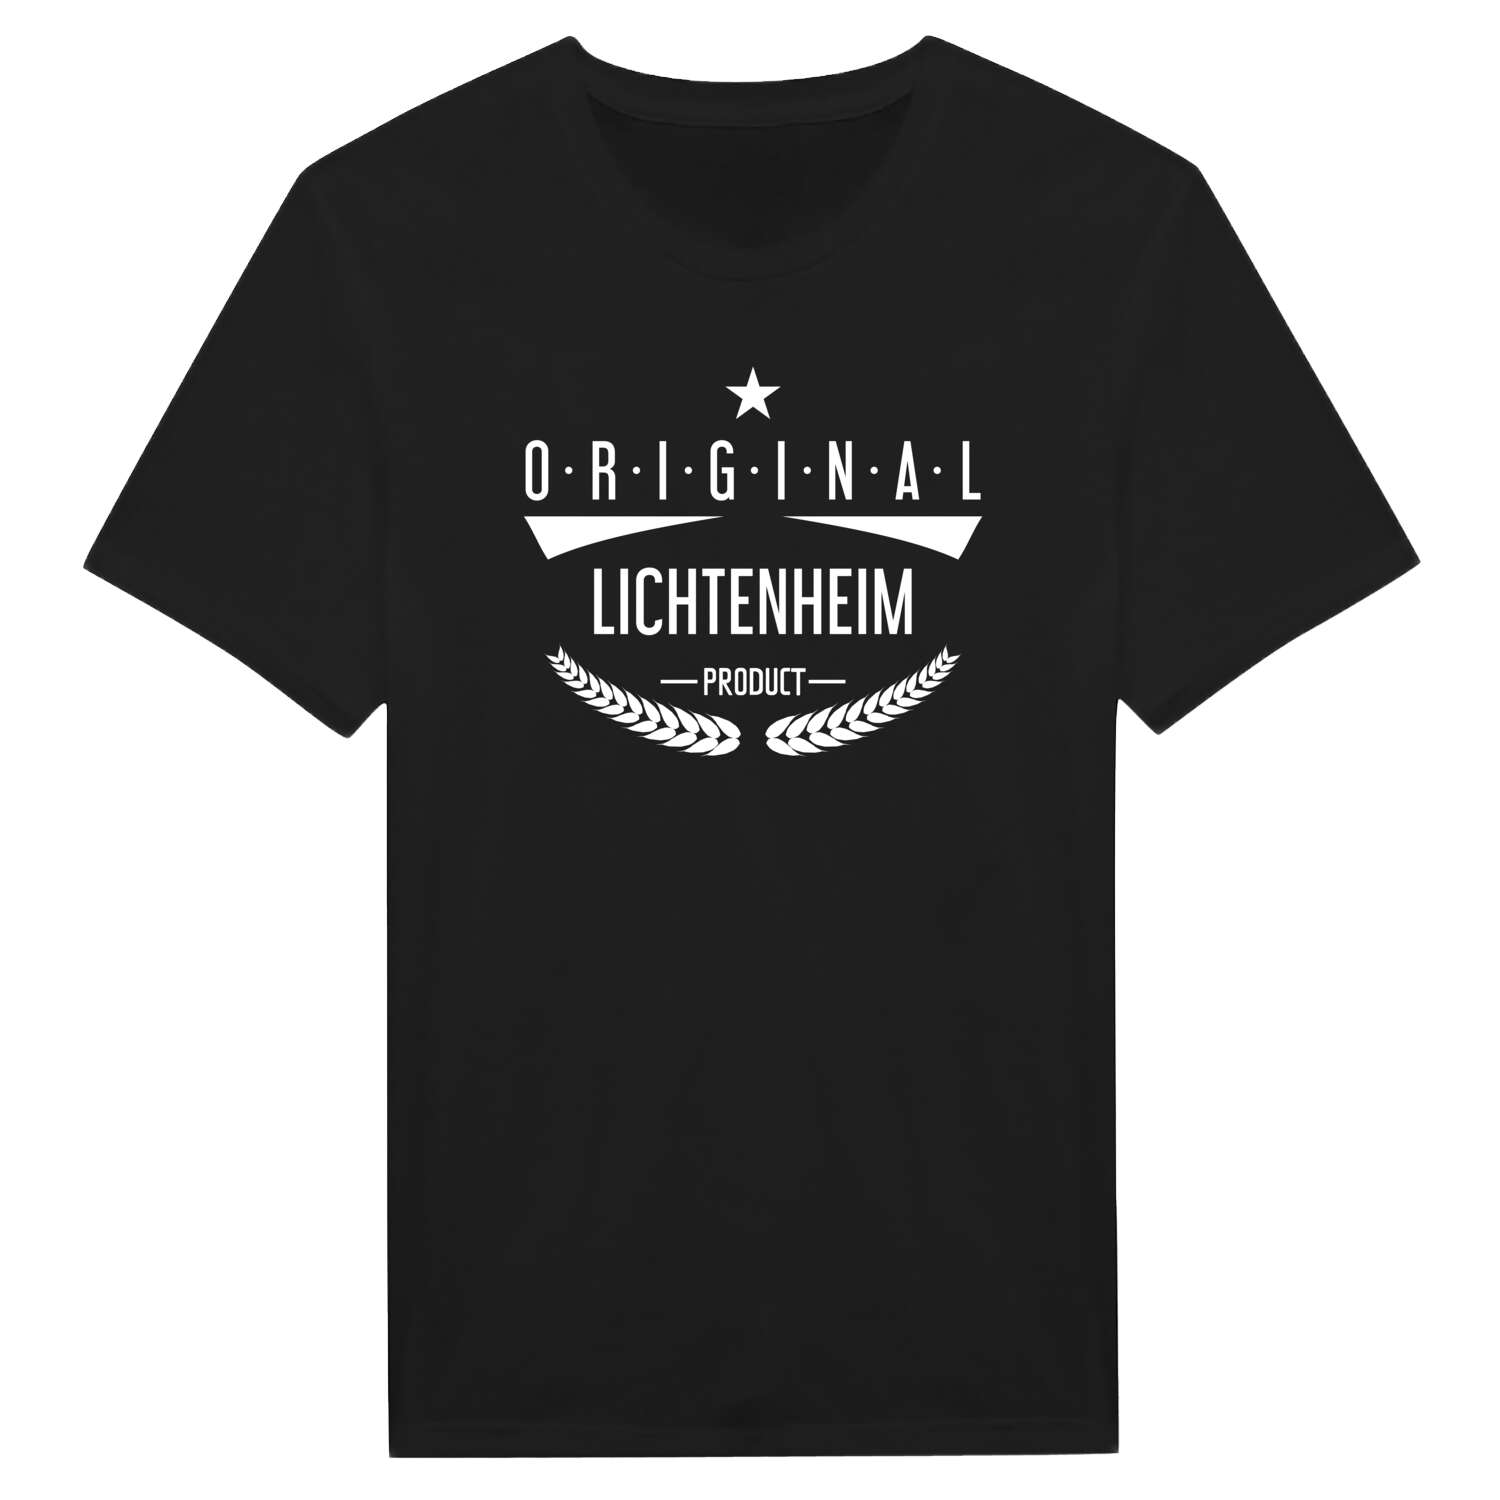 Lichtenheim T-Shirt »Original Product«